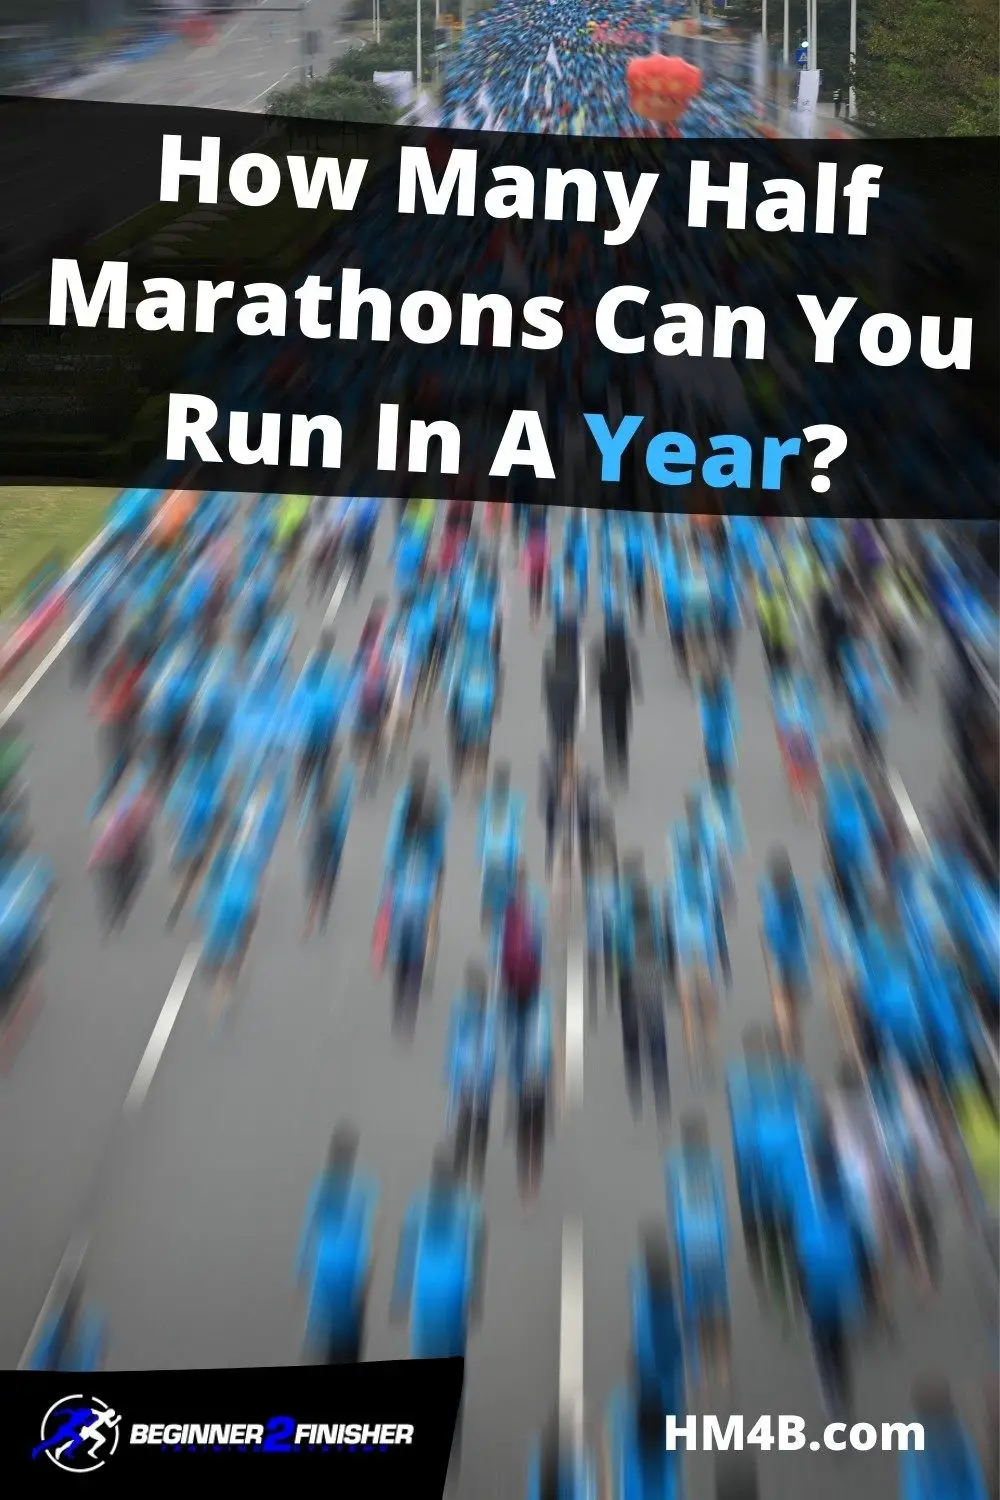 How Many Half Marathons Can I Run In A Year?